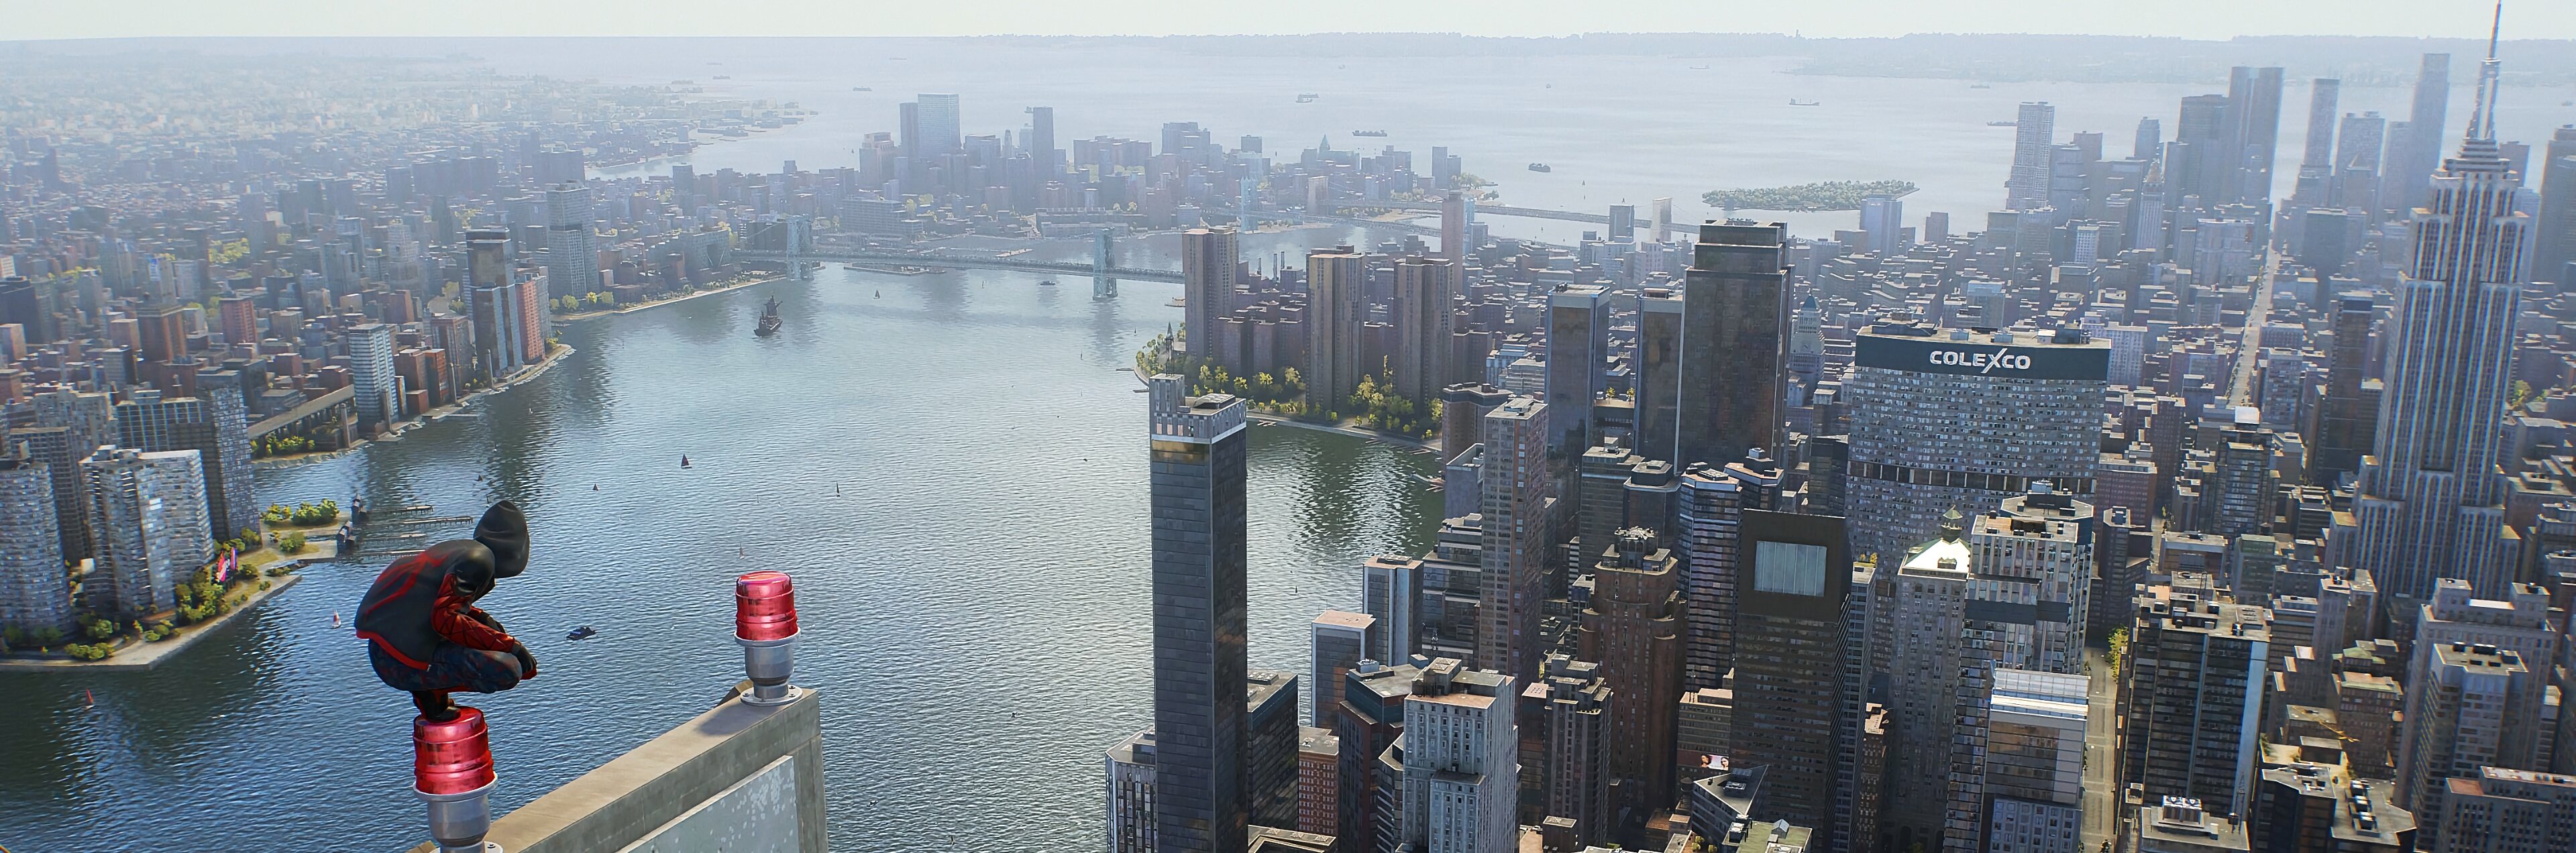 Spider-Man 2 - Virtuelles New York